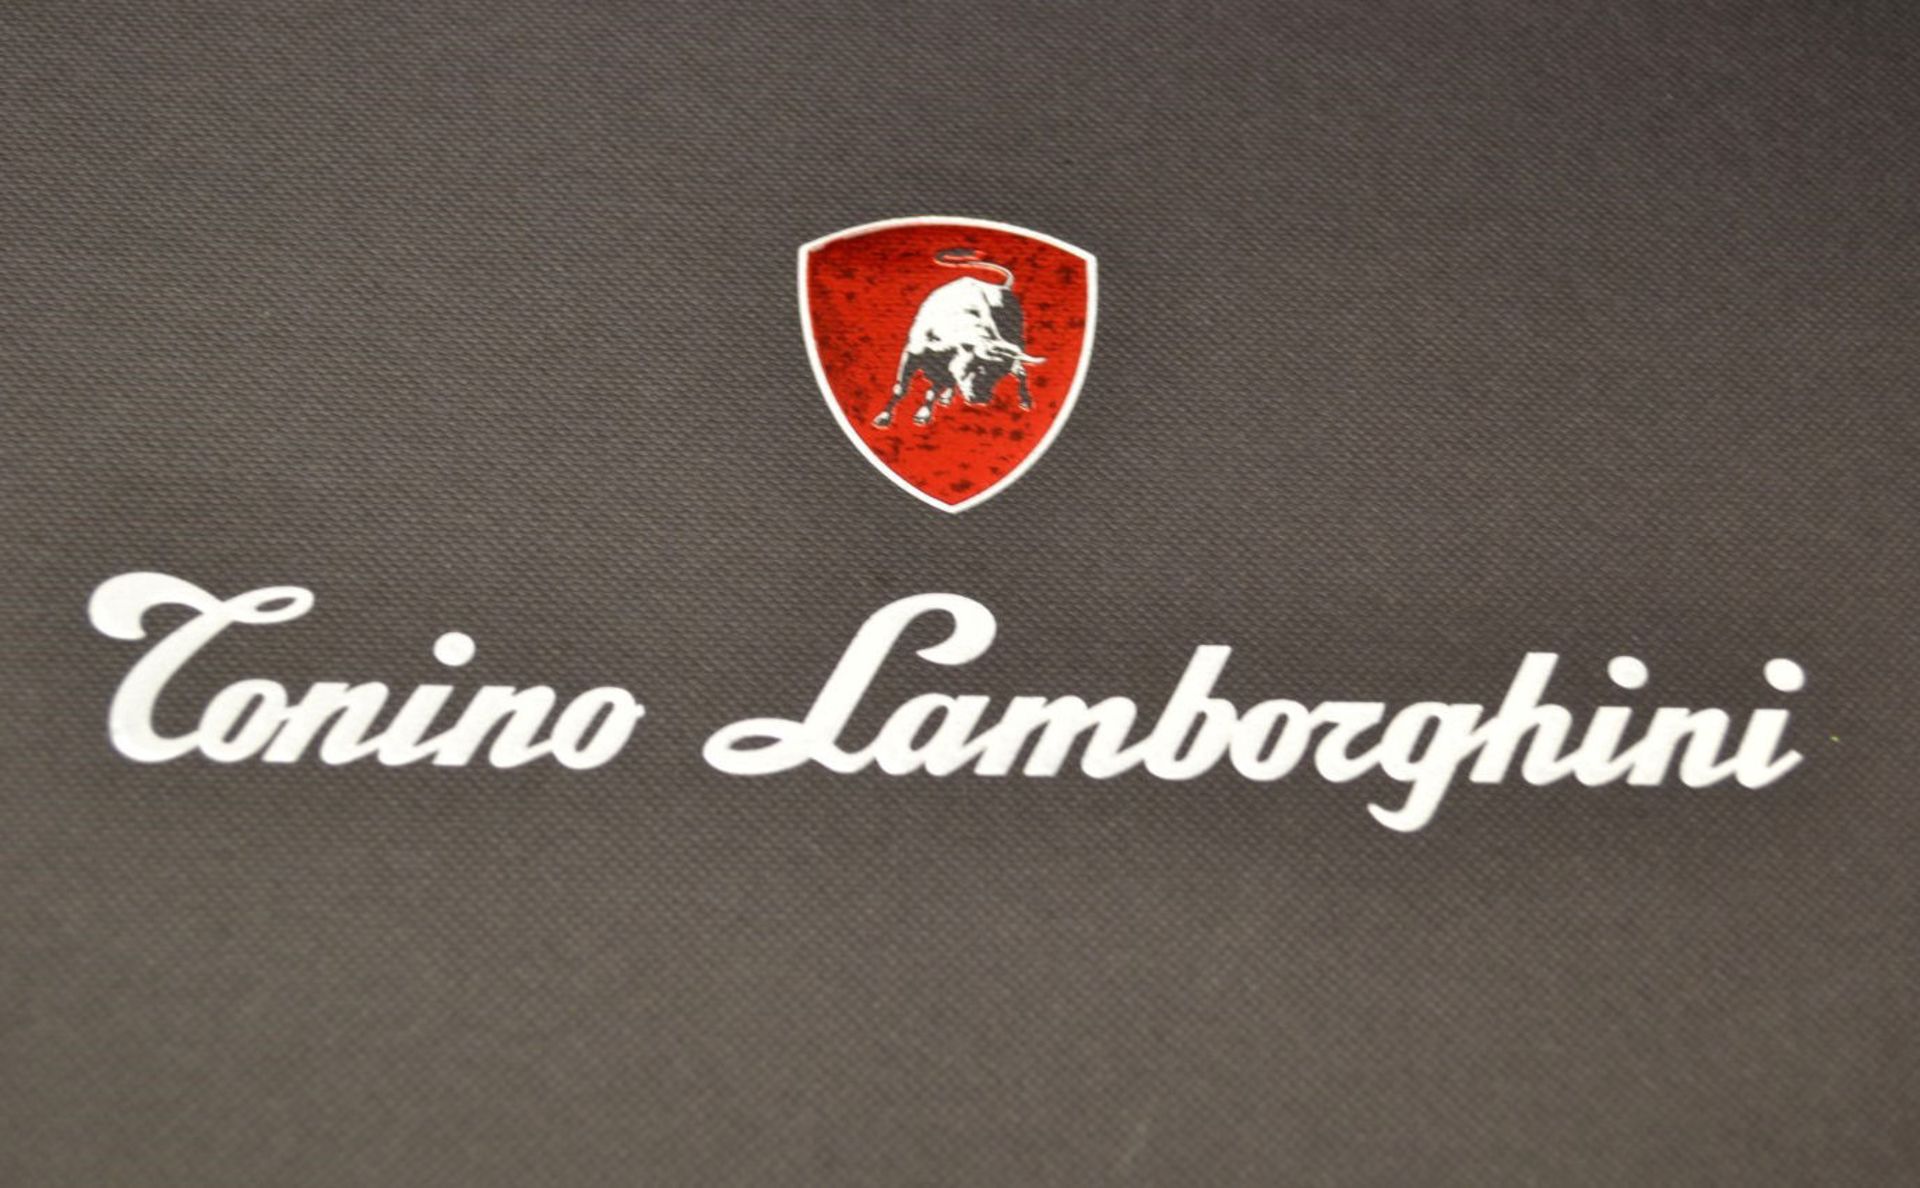 1 x Limited Edition Lamborghini "88 Tauri" Android Smart Phone - Leather Snakeskin-Style Finish - Image 11 of 26